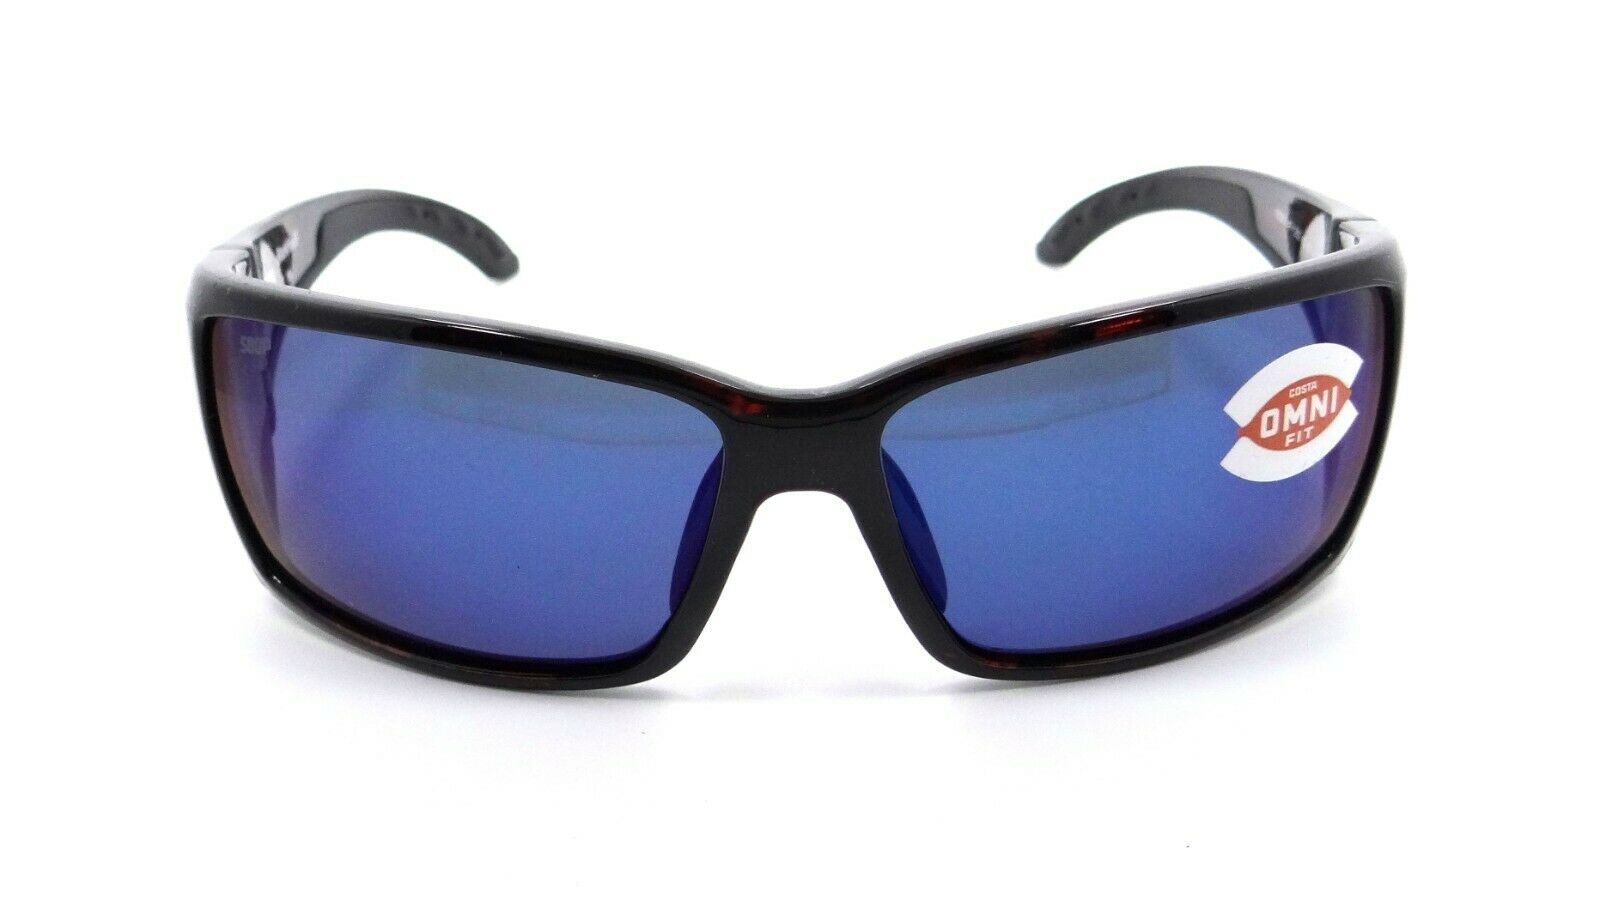 Costa Del Mar Sunglasses Blackfin 62-14-115 Tortoise/Blue Mirror 580P Global Fit-097963537919-classypw.com-2